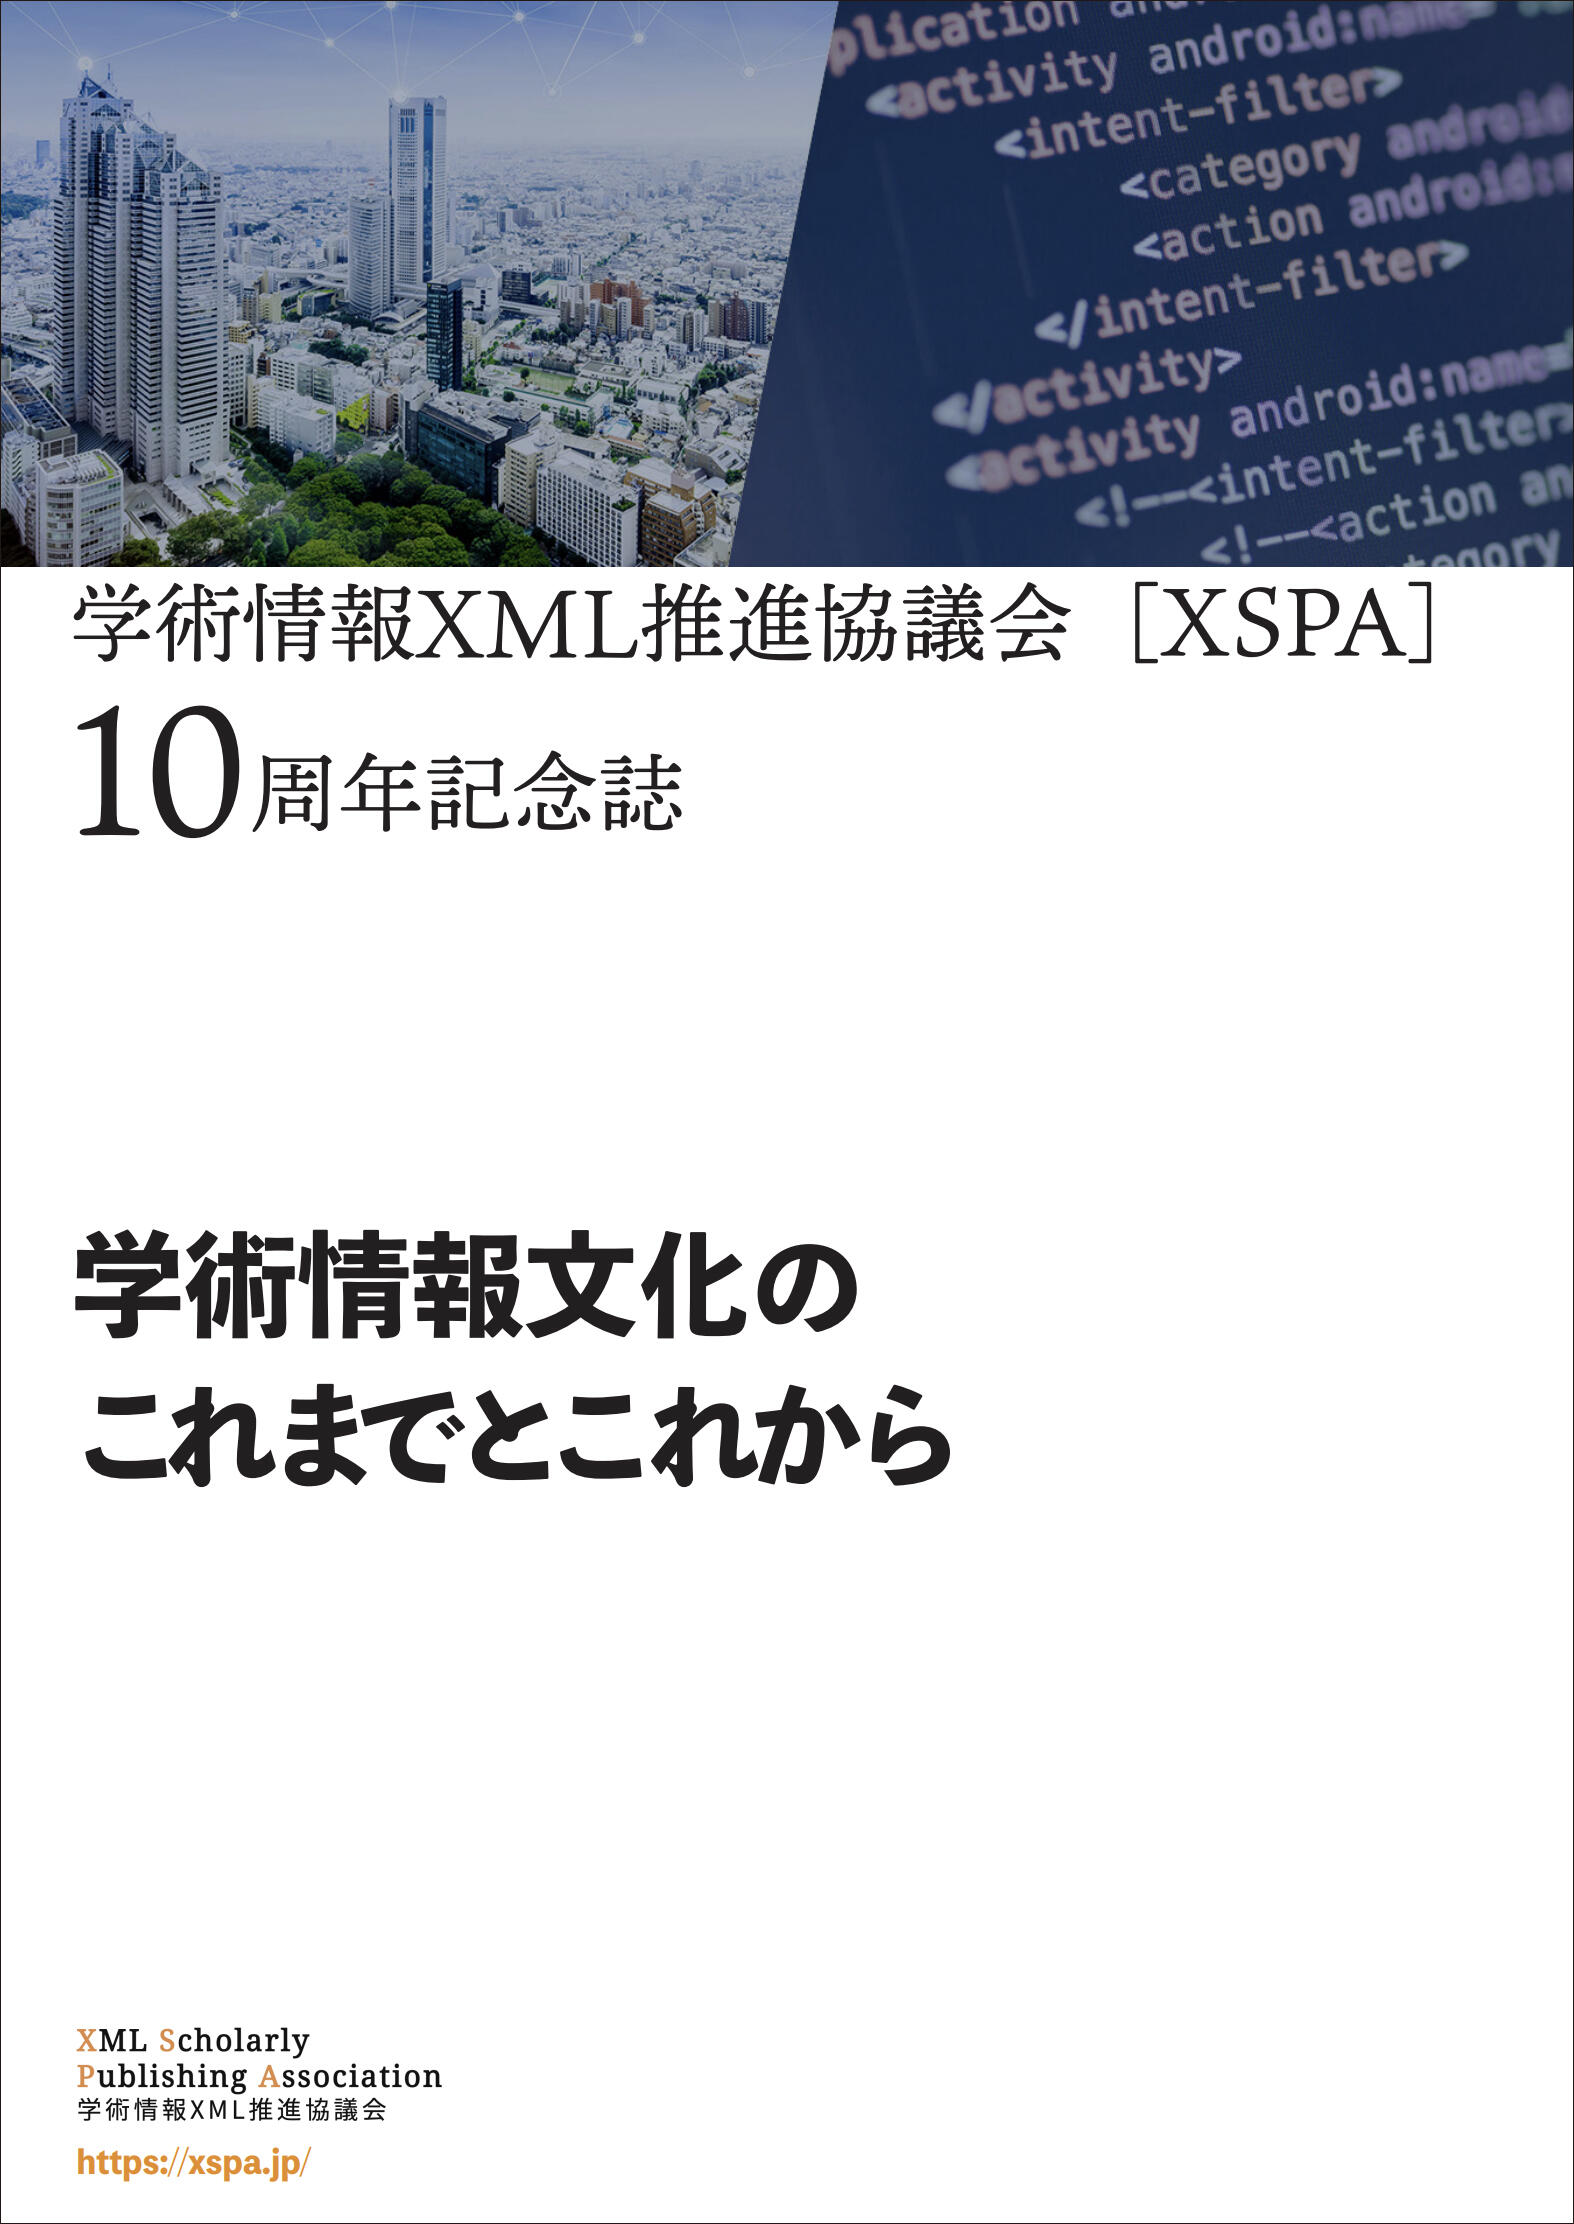 XSPA2022.jpg